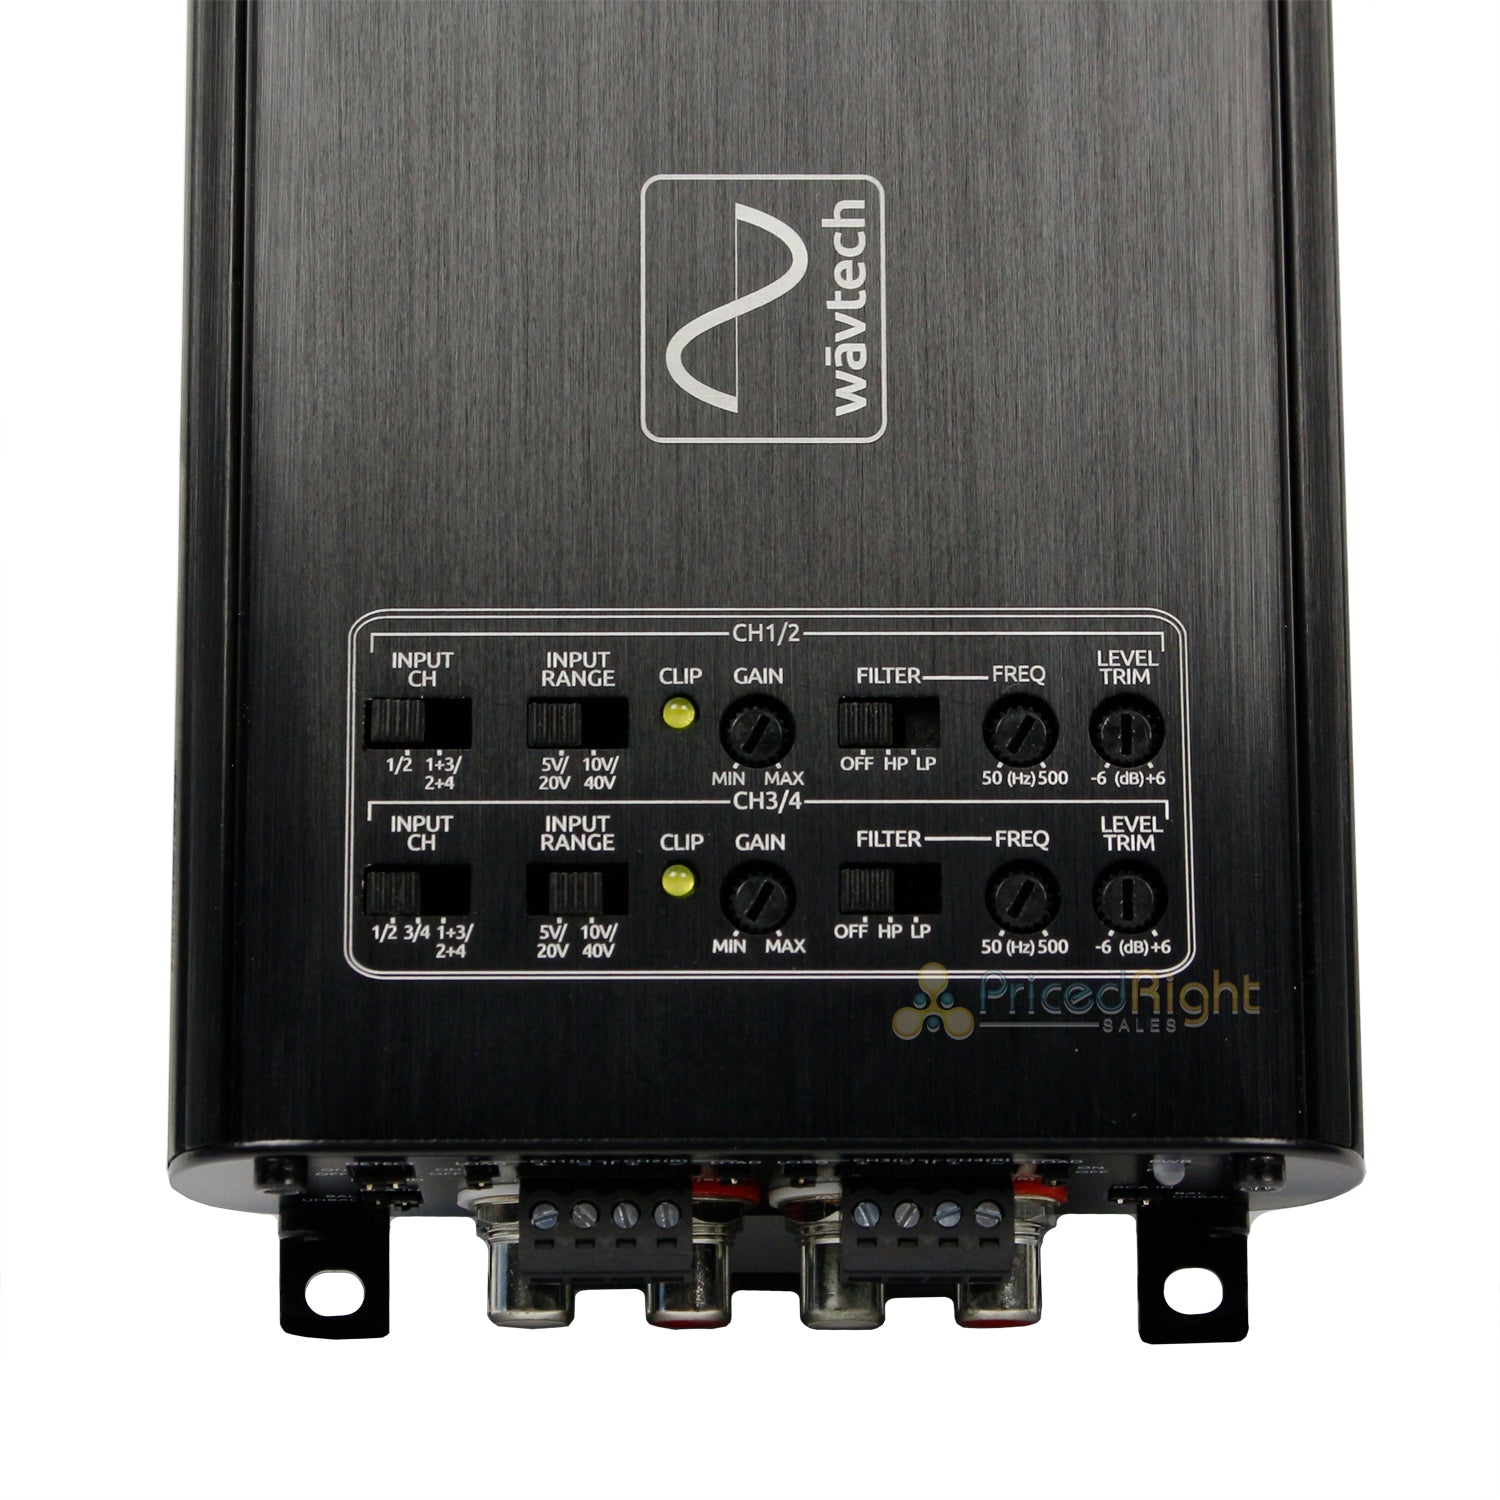 Wavtech Mini Series 300 Watt 4-Channel Amplifier w/Summing, 75 x 4 At 2 Ohms